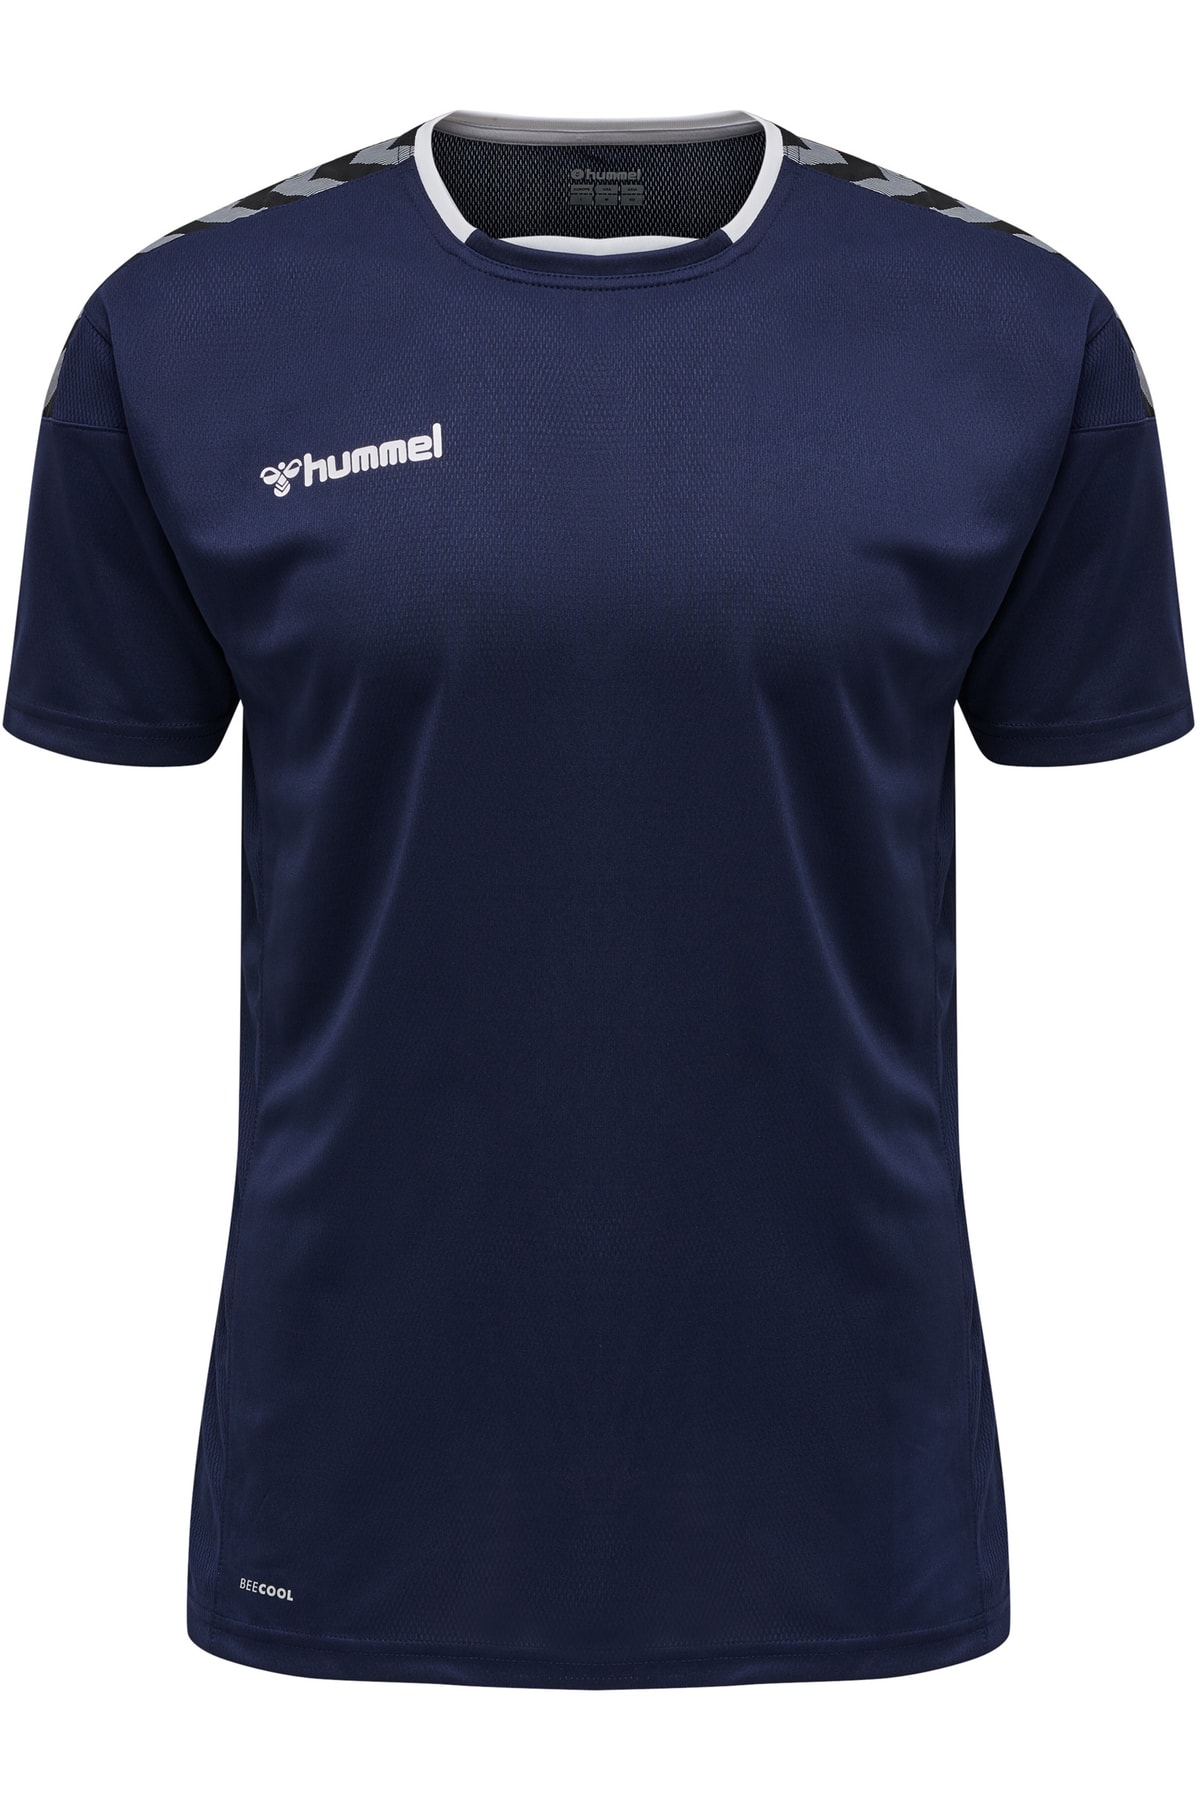 HUMMEL T-Shirt Blau Regular Fit